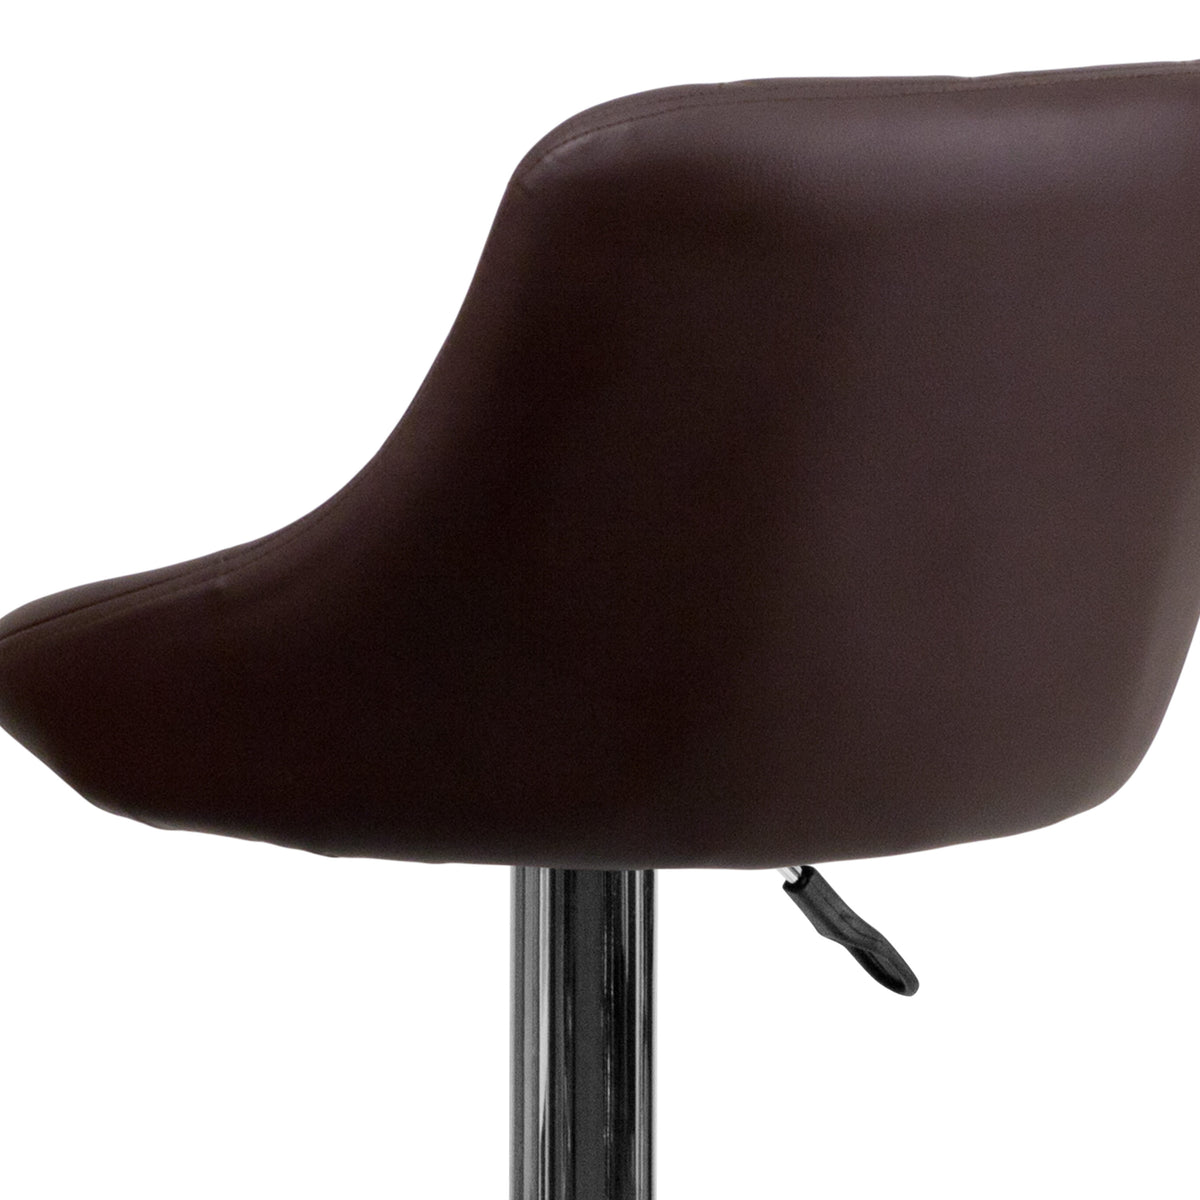 Brown |#| Brown Vinyl Bucket Seat Adjustable Height Barstool with Diamond Pattern Back